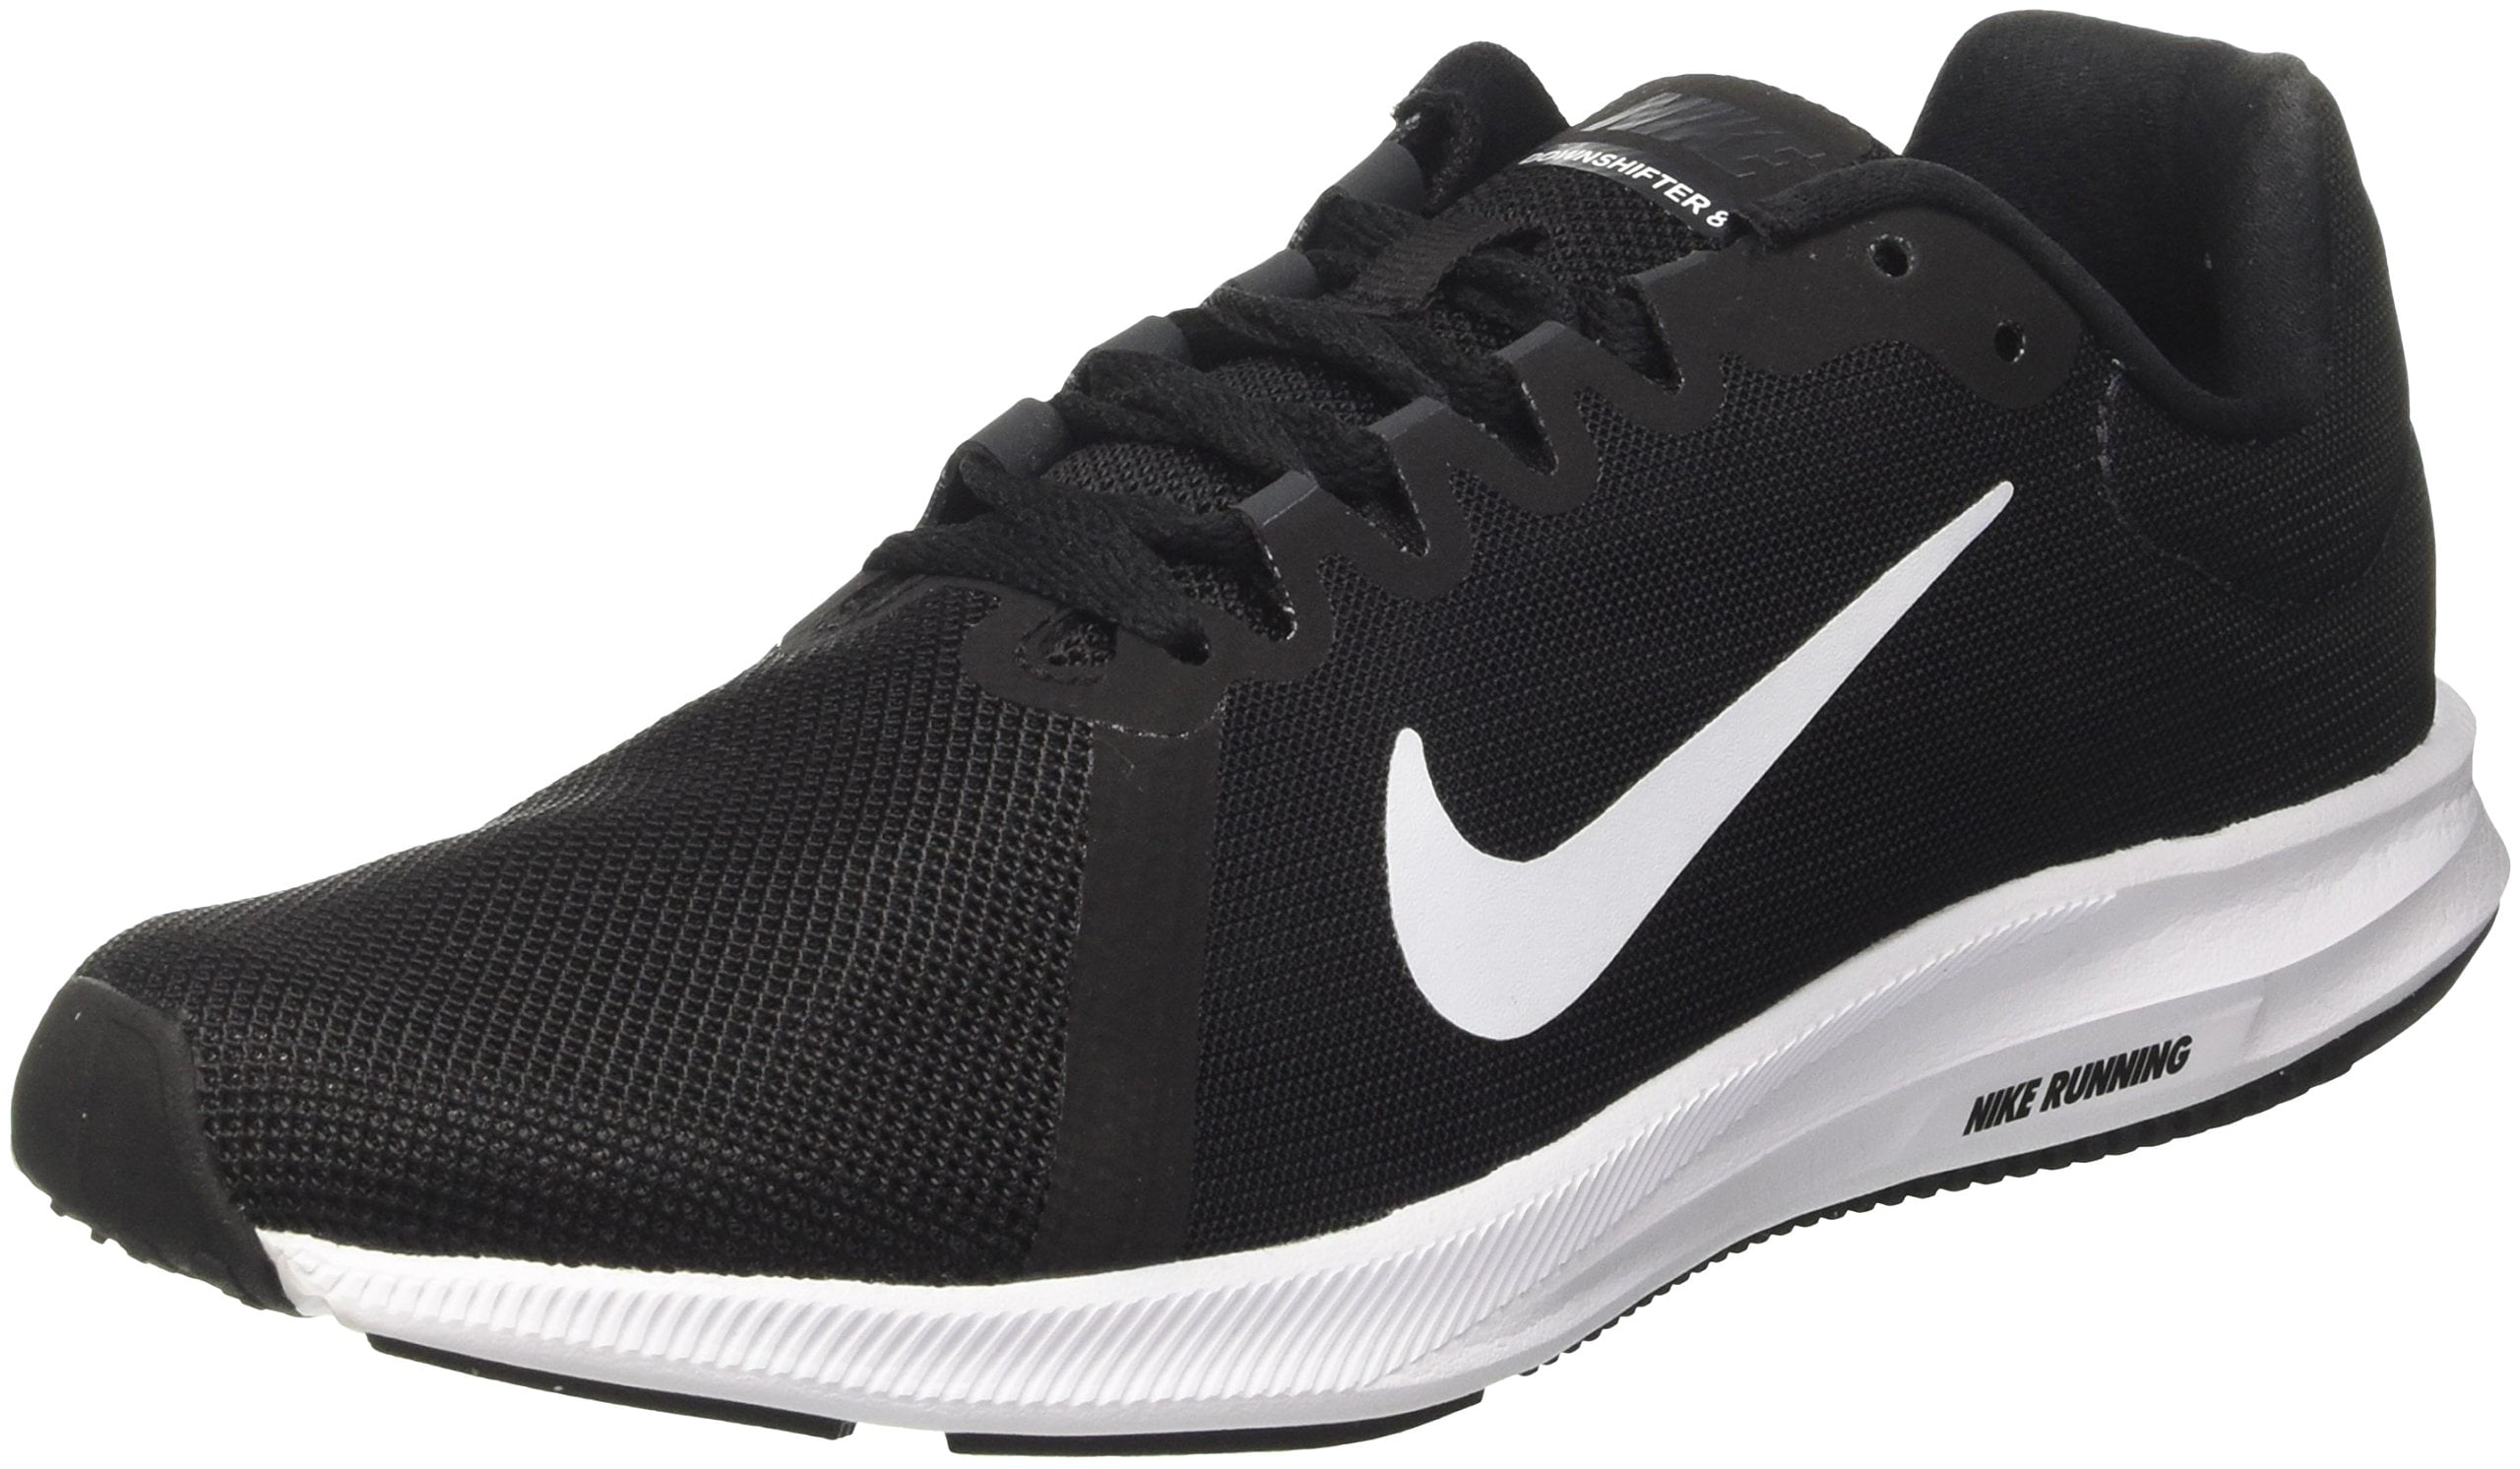 fútbol americano Respectivamente En honor Nike 908984-001: Men's Downshifter 8 Running Black/White/Anthracite  Sneakers (9 D(M) US Men) - Walmart.com